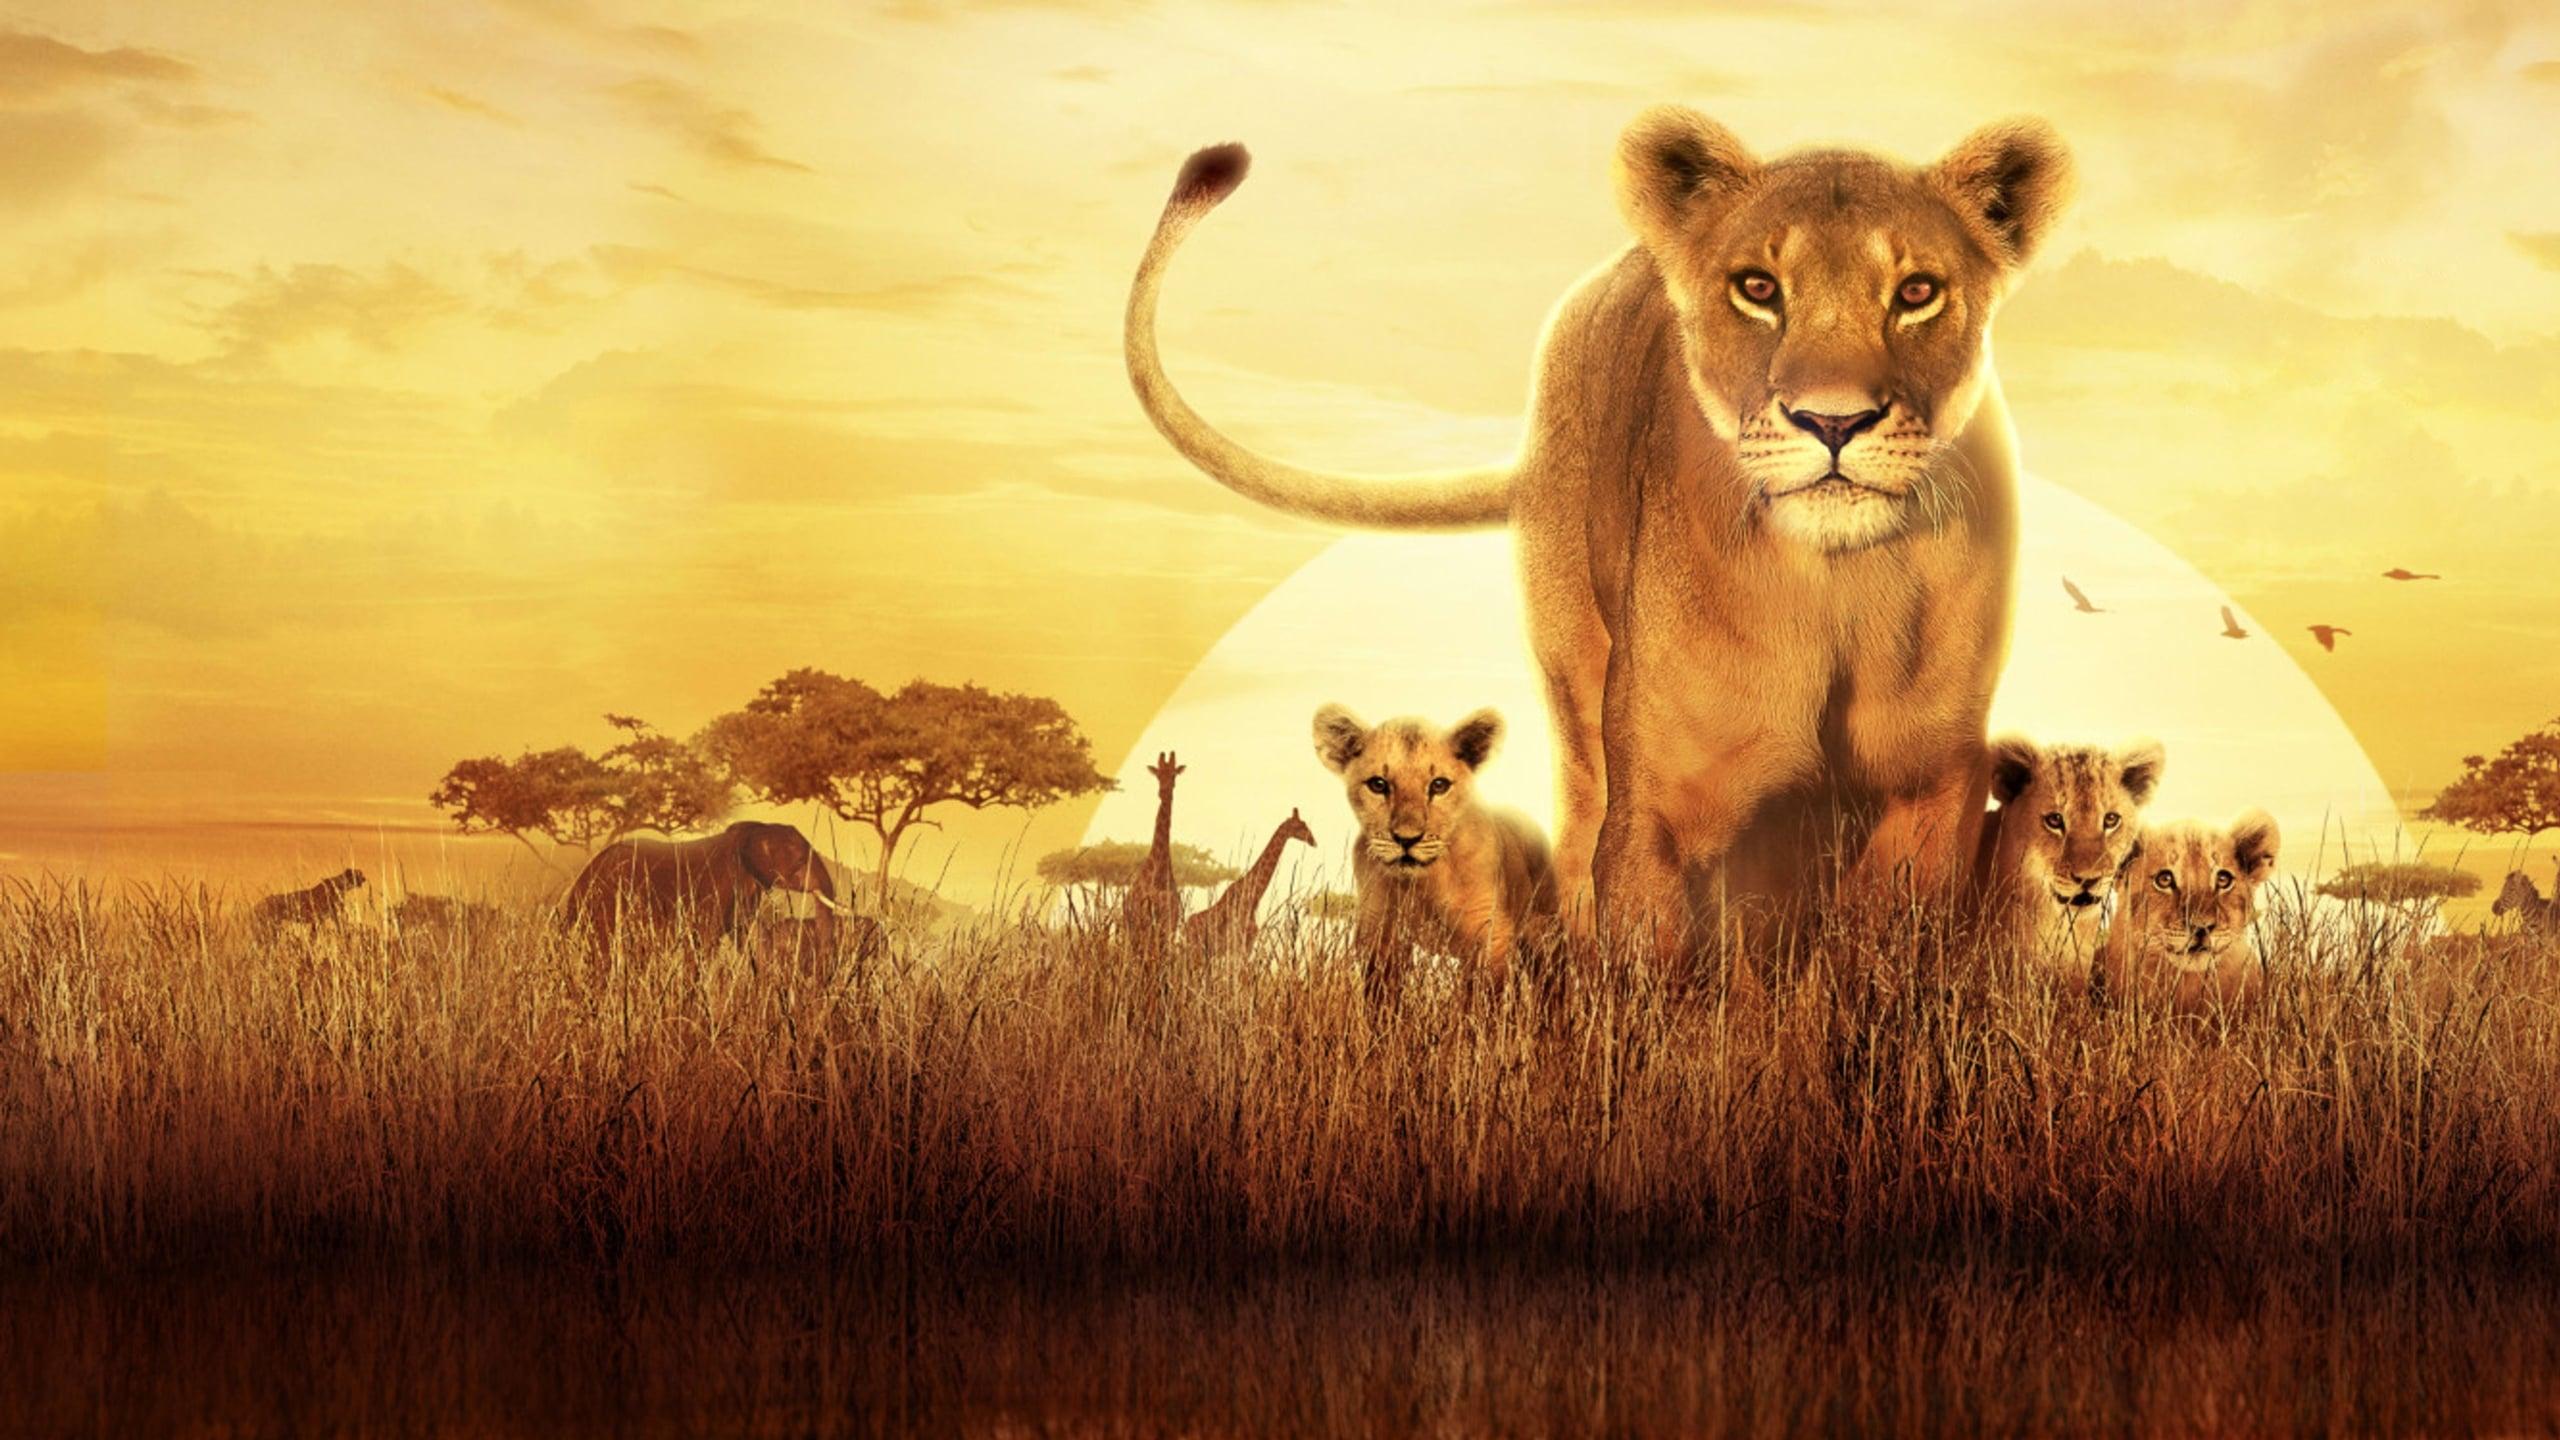 Serengeti backdrop